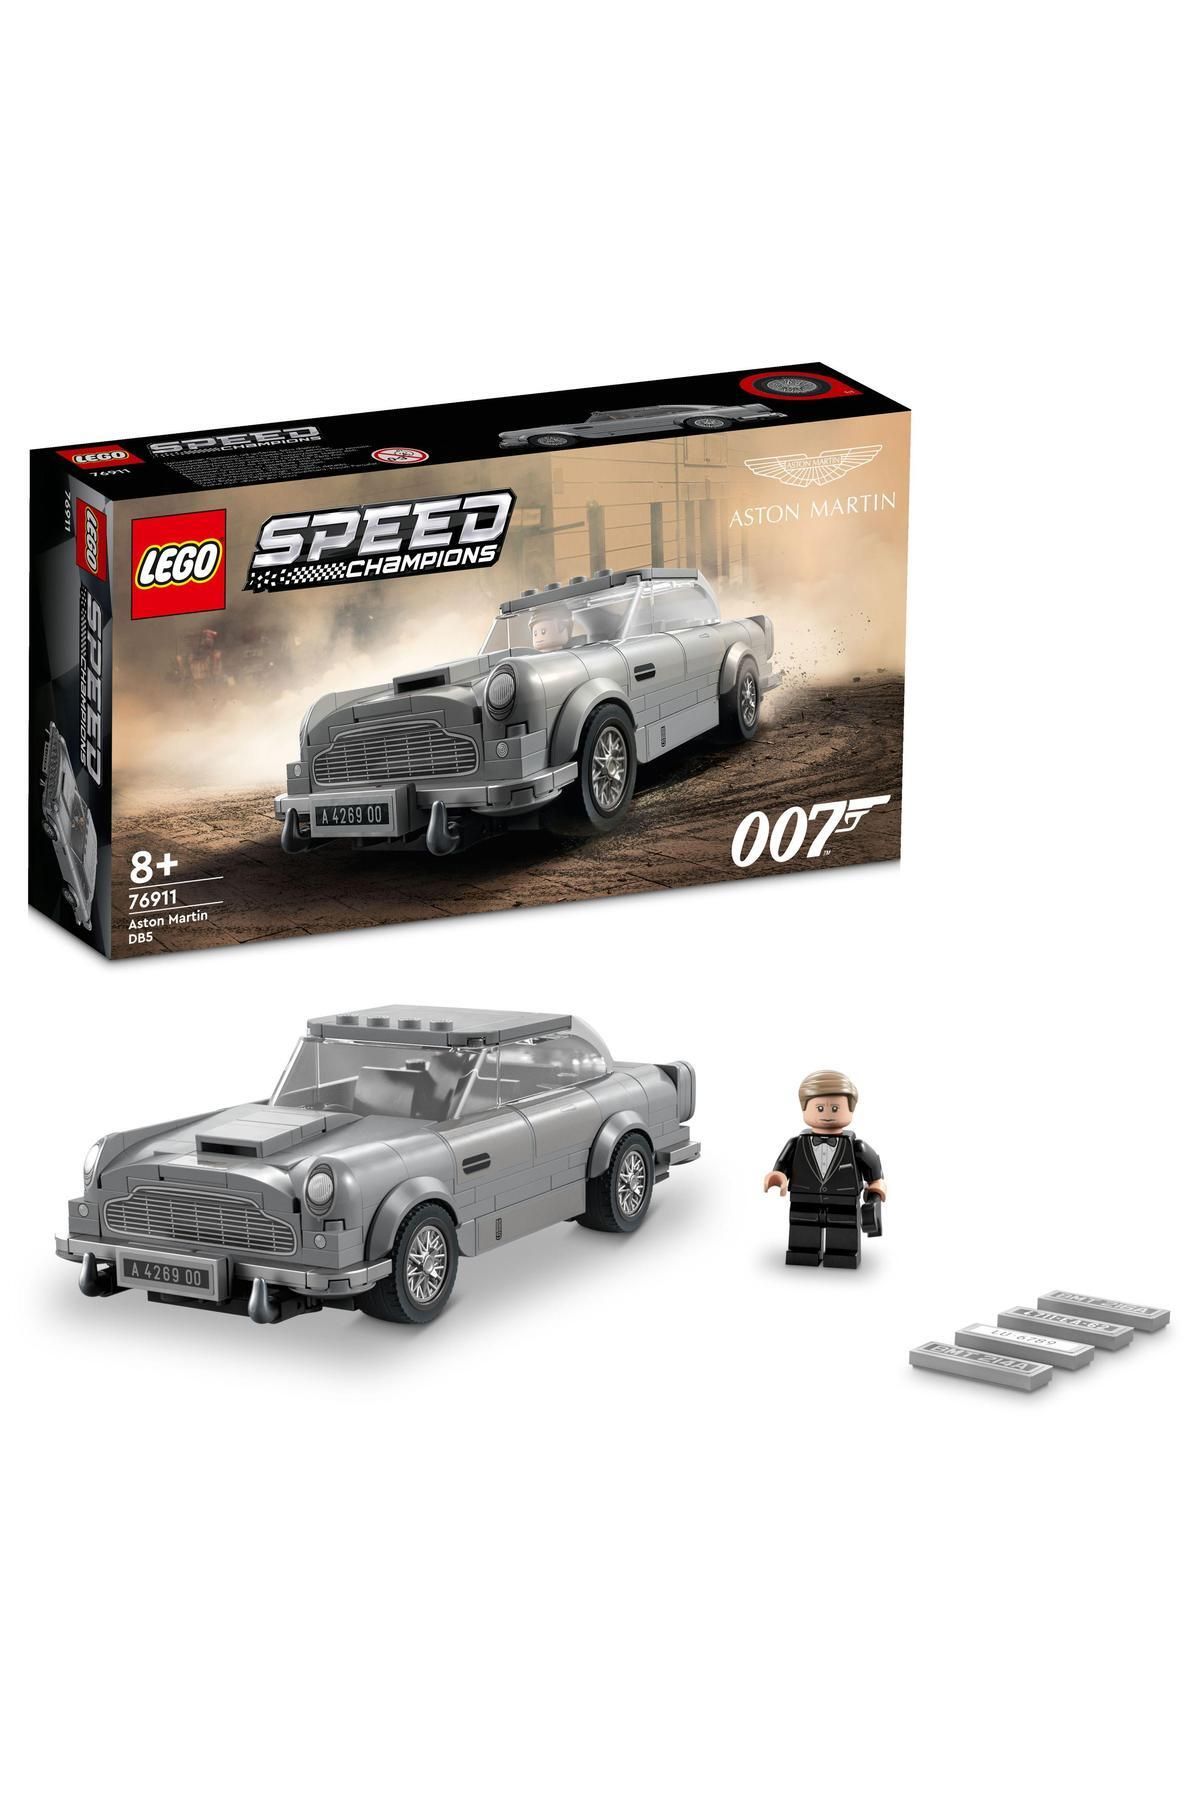 LEGO Speed Champions 007 Aston Martin Db5 76911